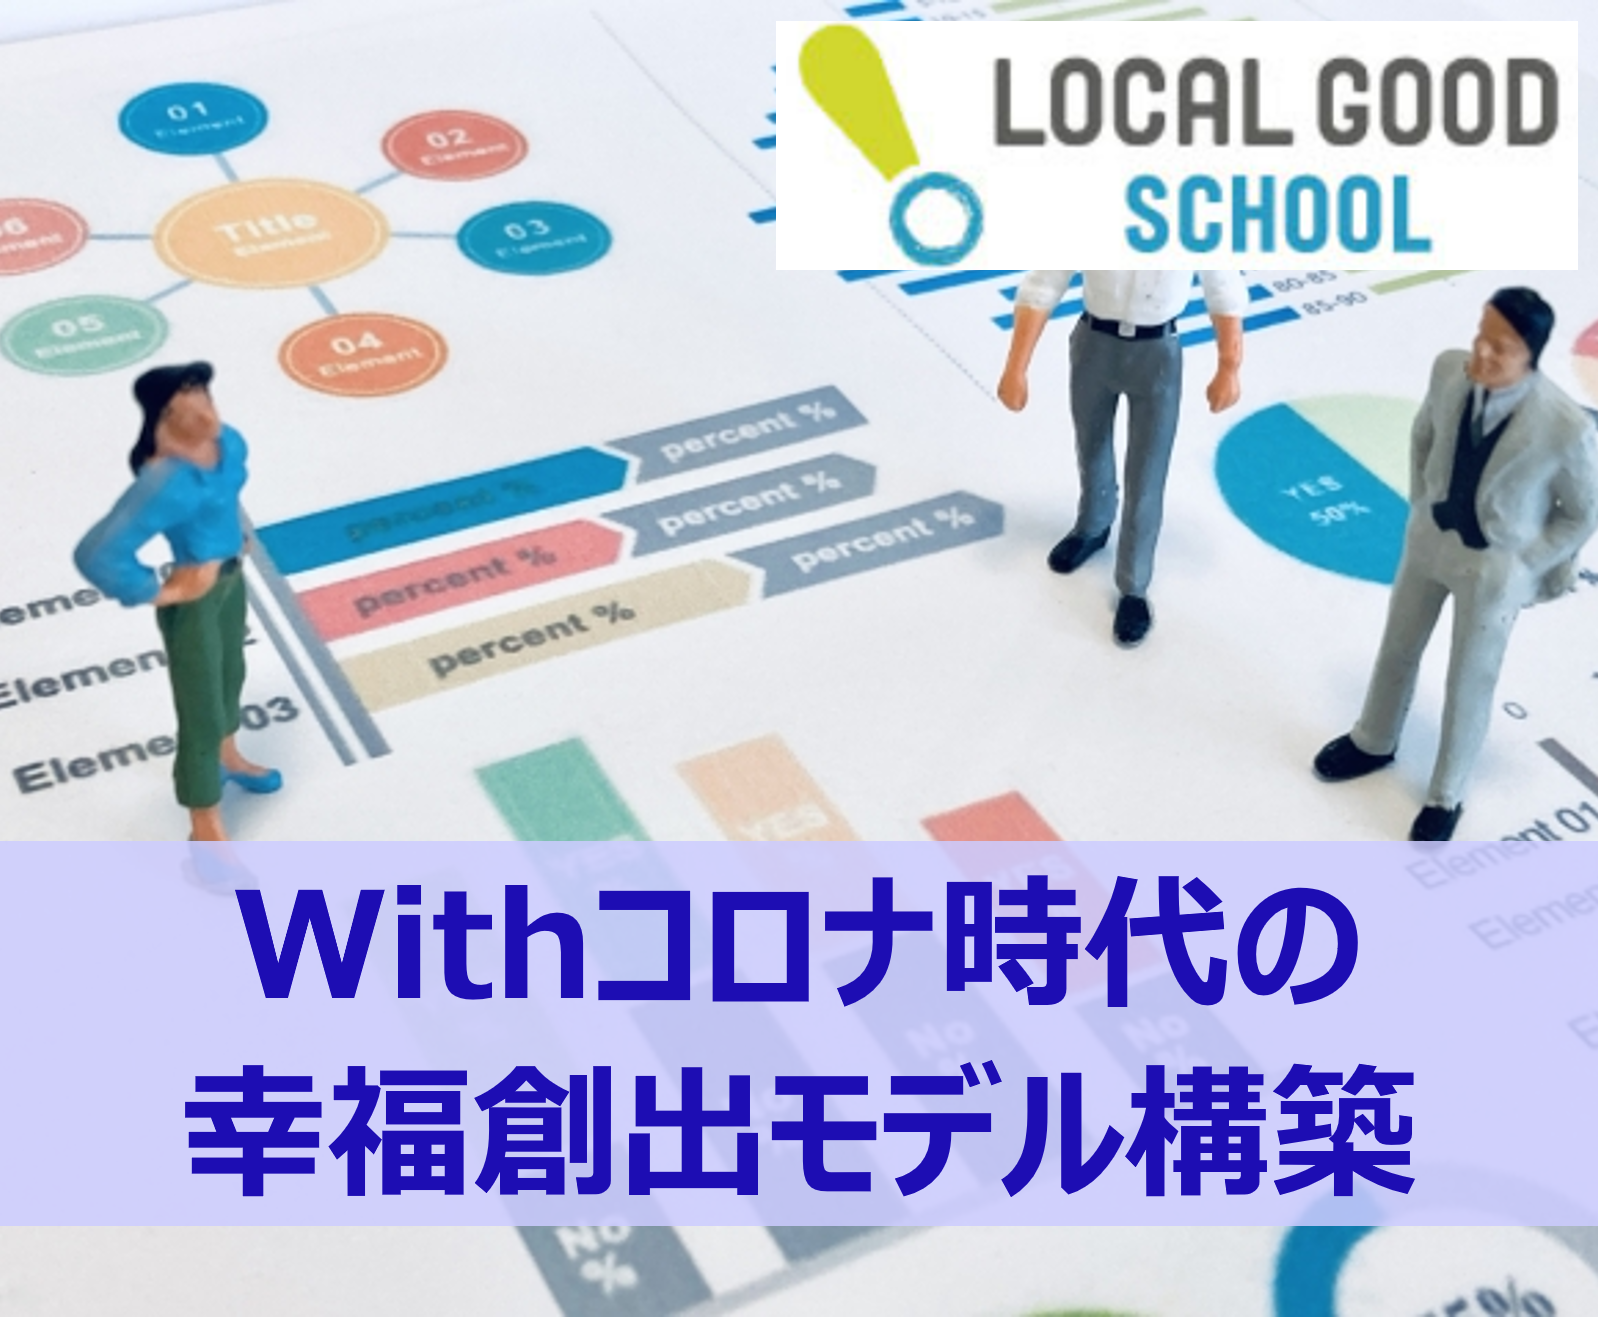 【LOCAL GOOD SCHOOL】人々の幸せを軸にした『ハピネスモデル』で地域課題を考える